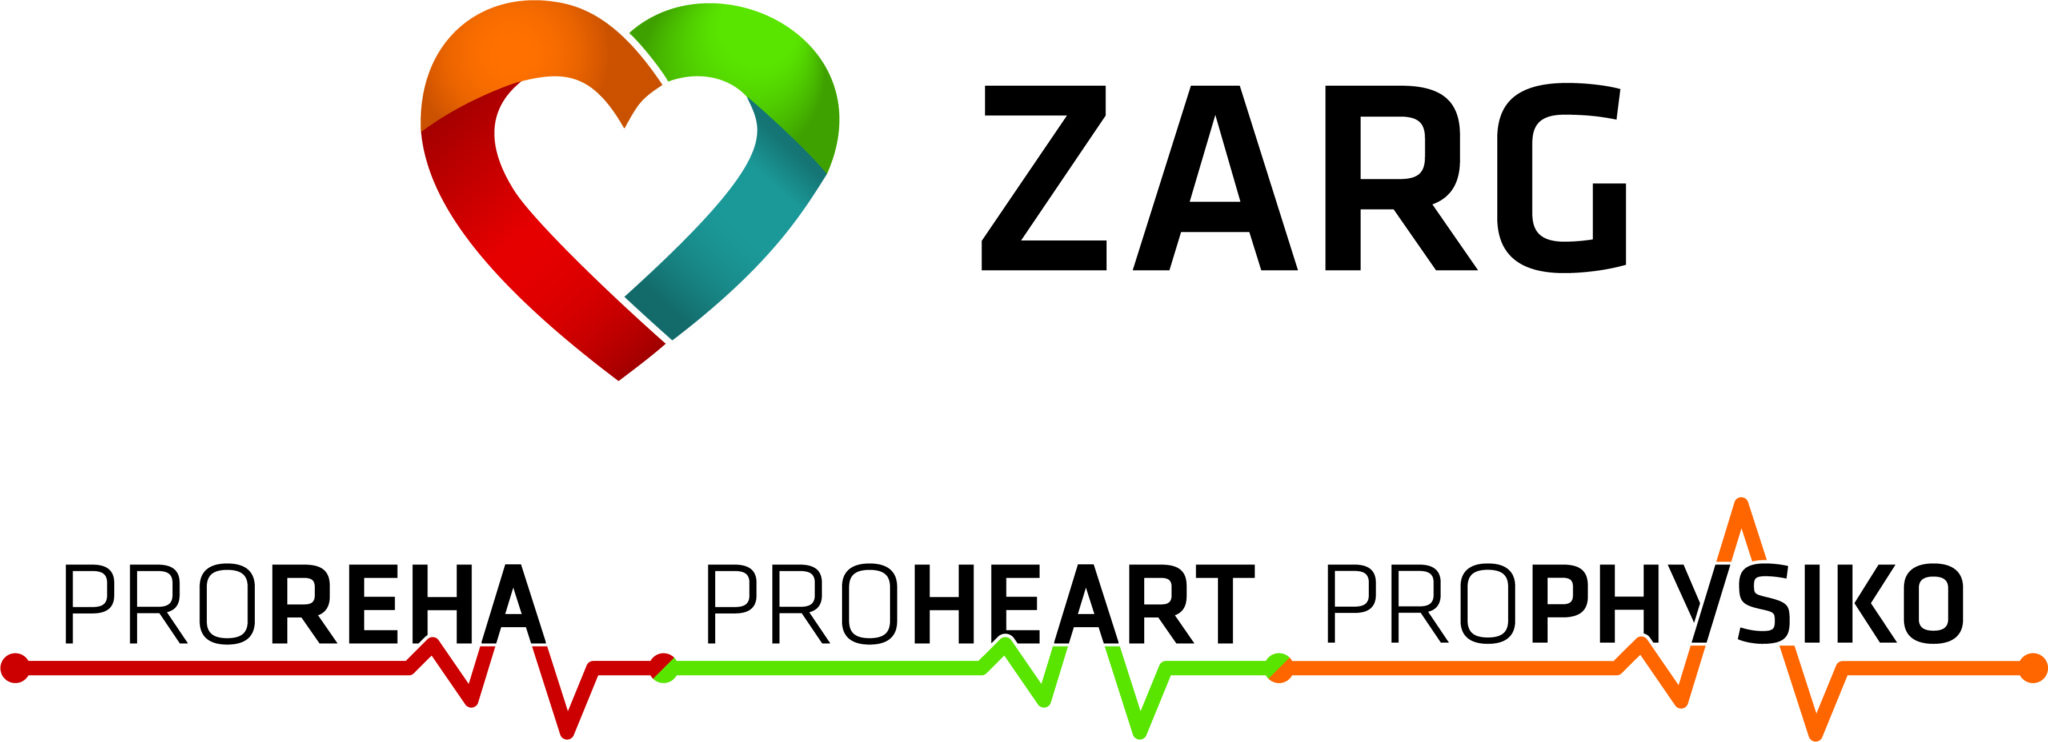 ZARG-Logo-Kombination-2048x742